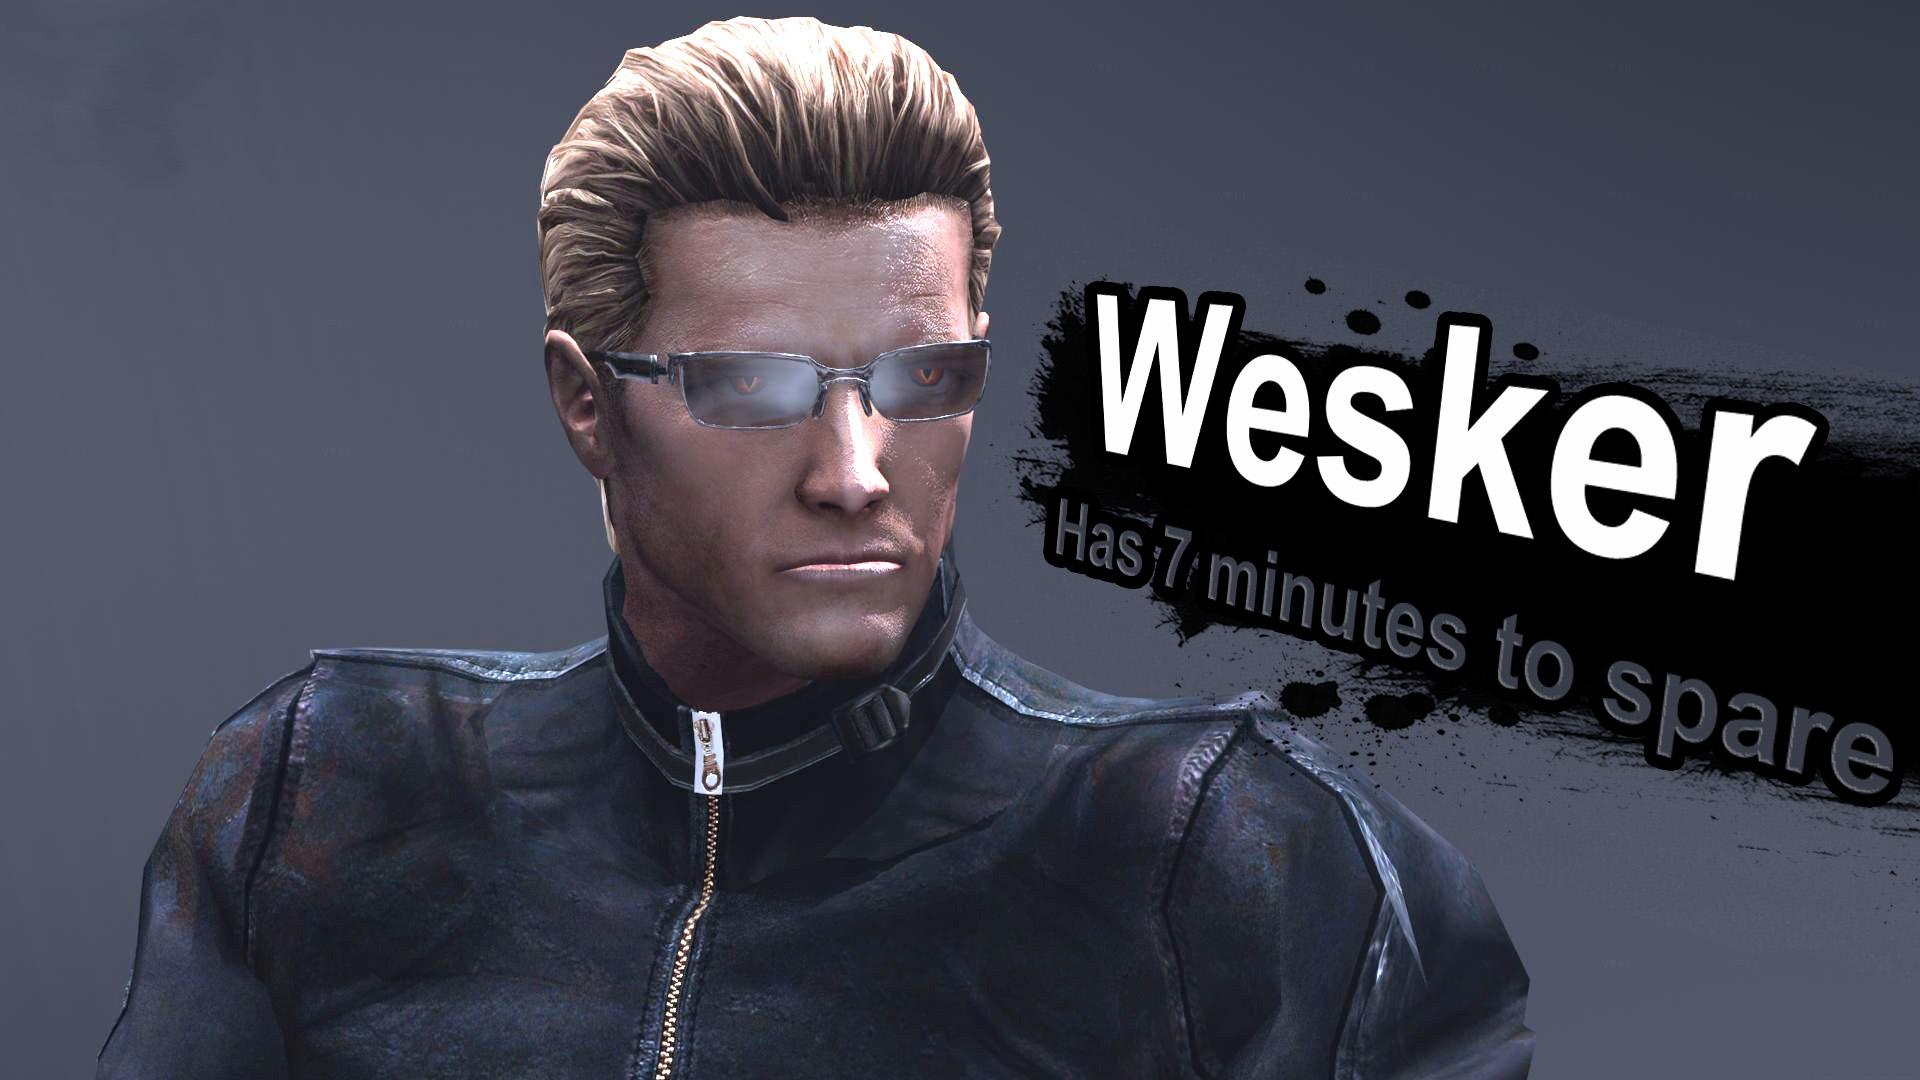 1920x1080 Albert Wesker has 7 minutes to spare | Super Smash Bros. 4 Character Announcement Parodies | Know Your Meme